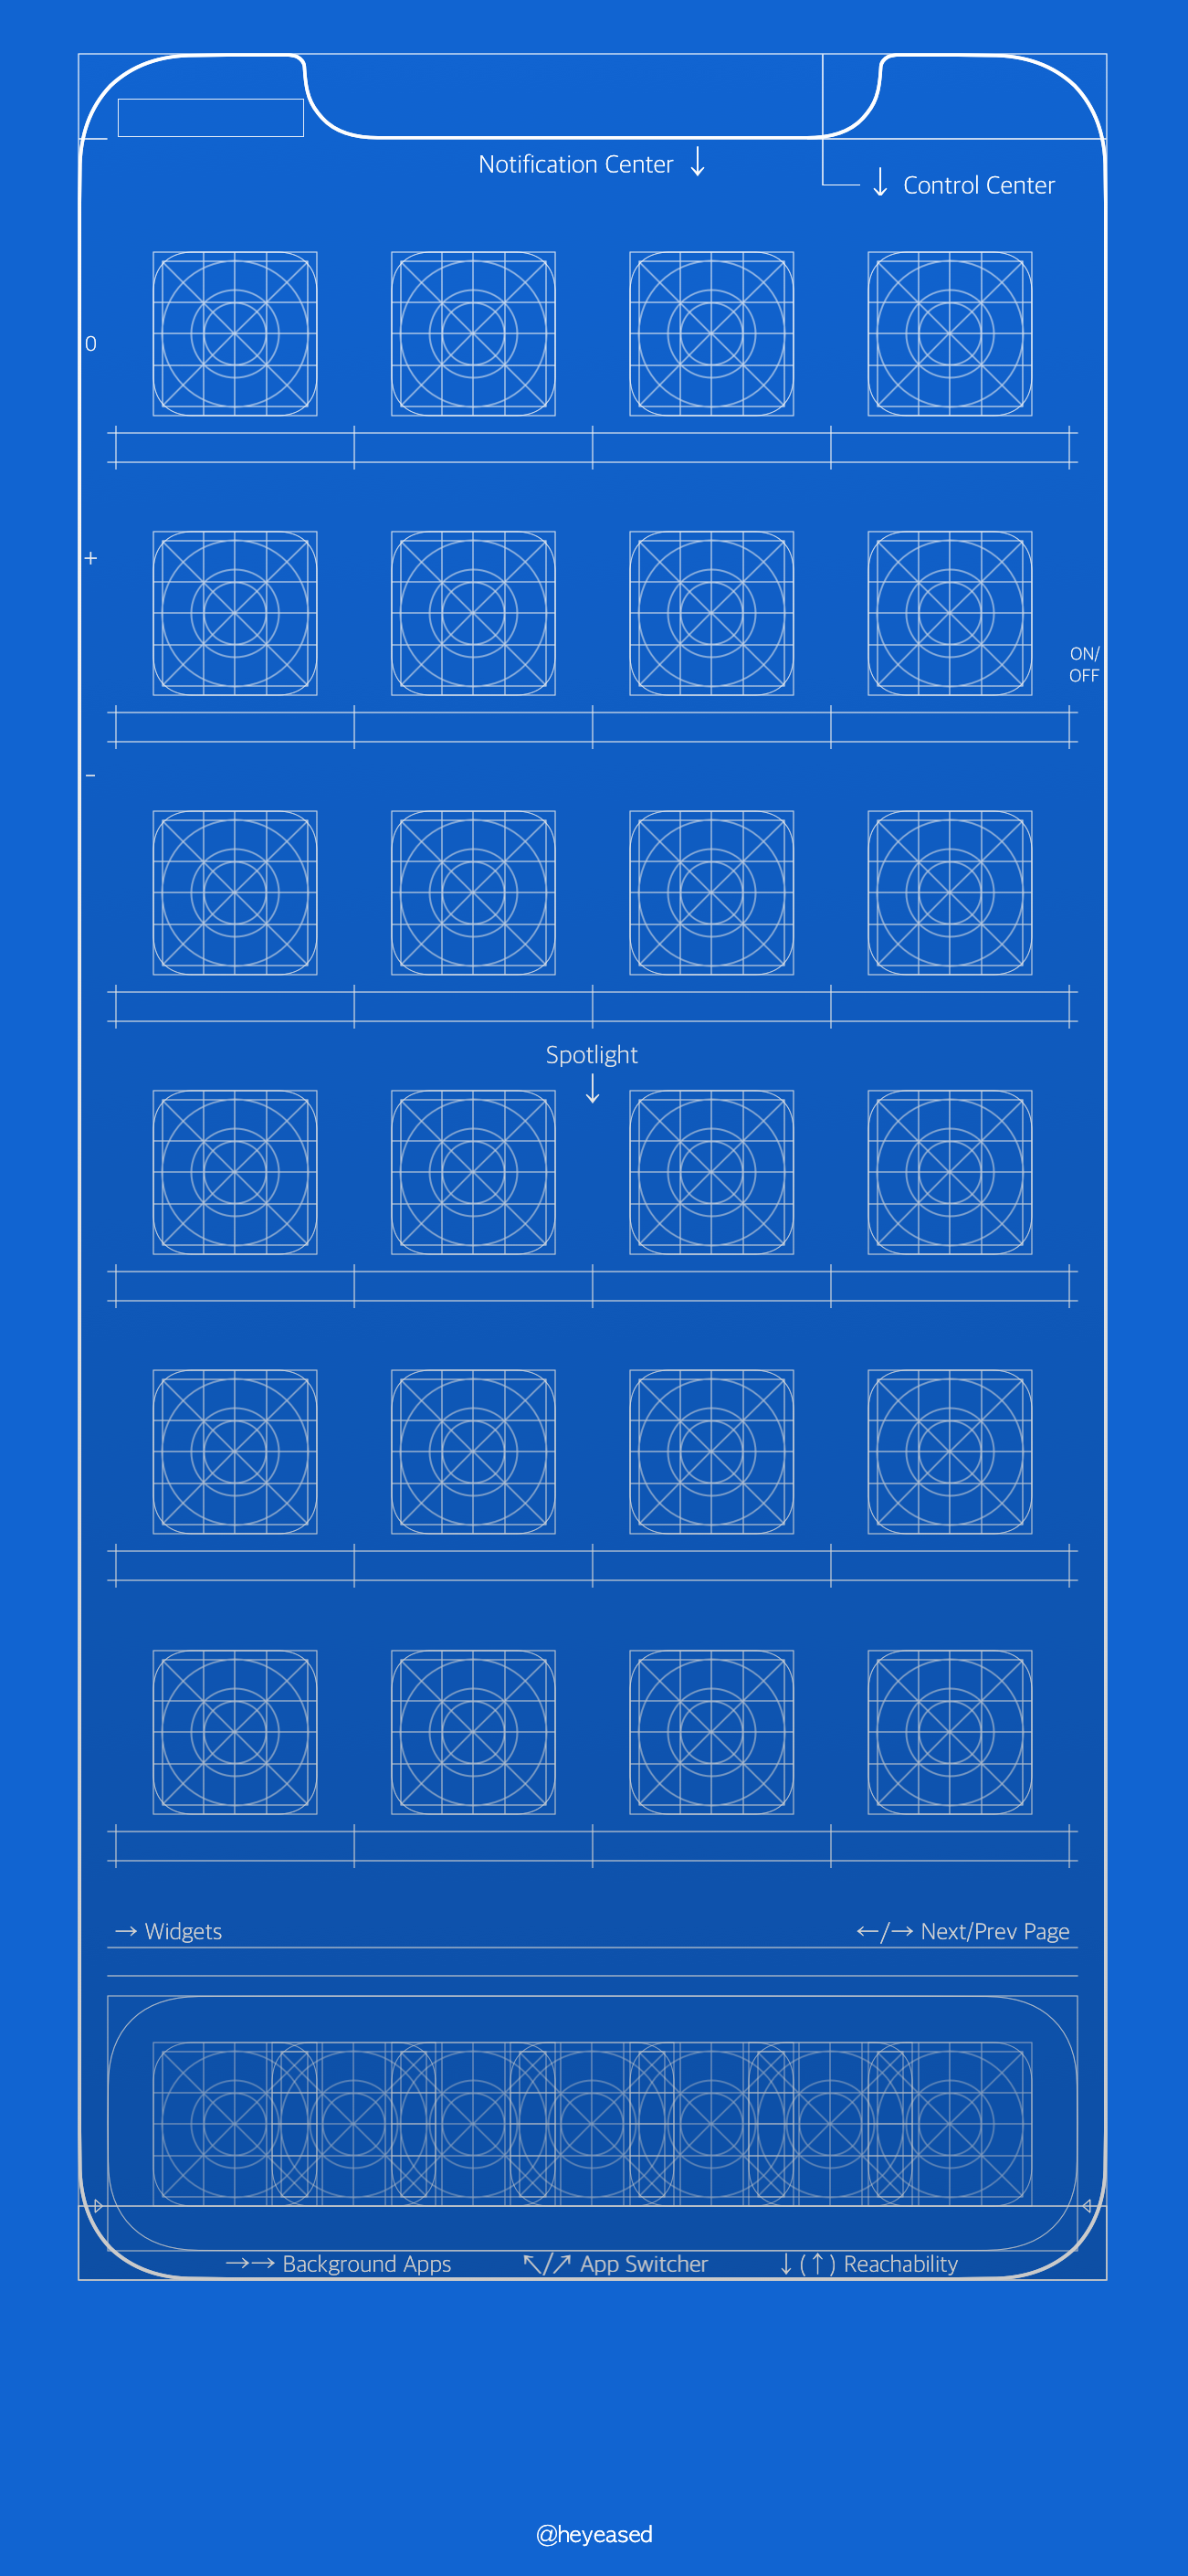 Grid and blueprint wallpaper for iPhoneidownloadblog.com